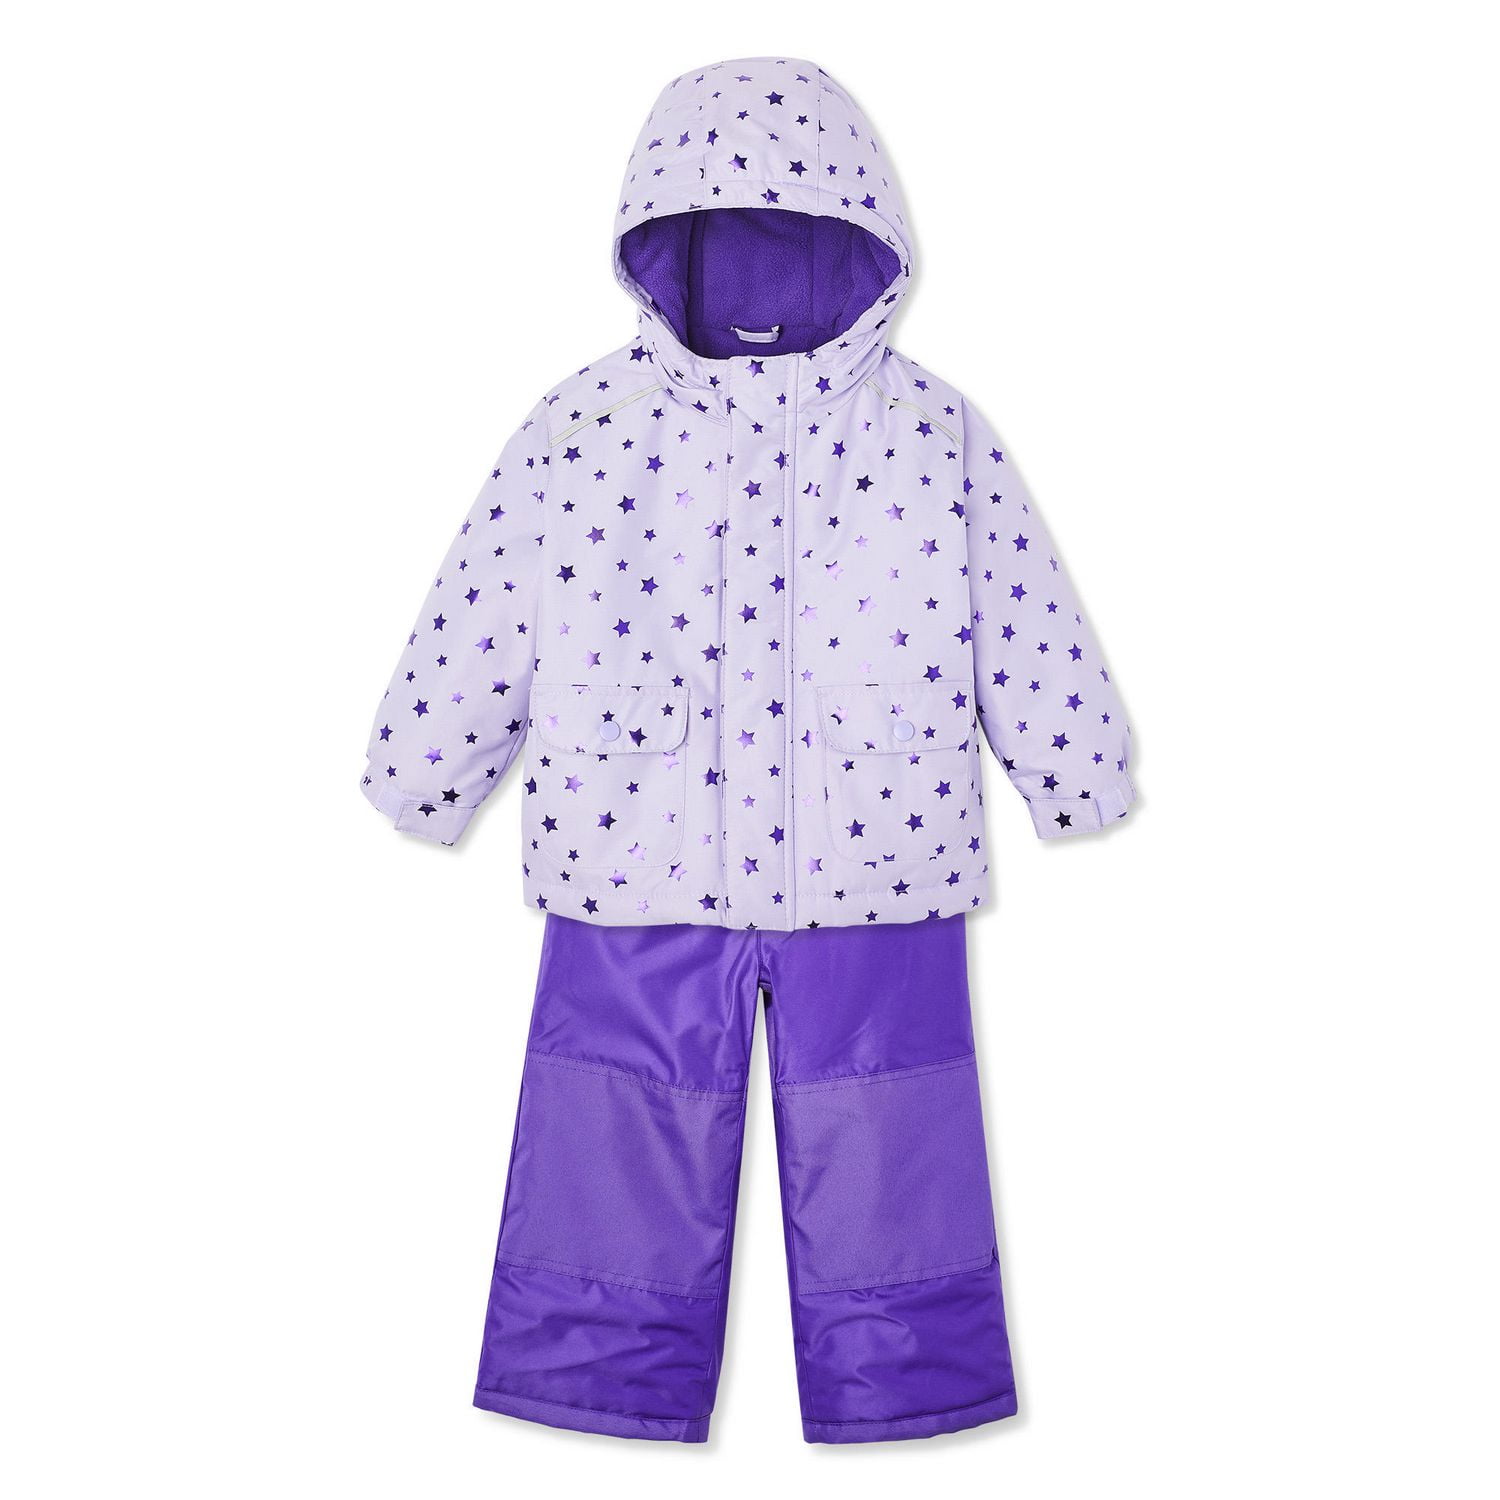 32 Degrees Heat Snow Pants, Purple, Kid Size M 10/12 - baby & kid stuff -  by owner - craigslist